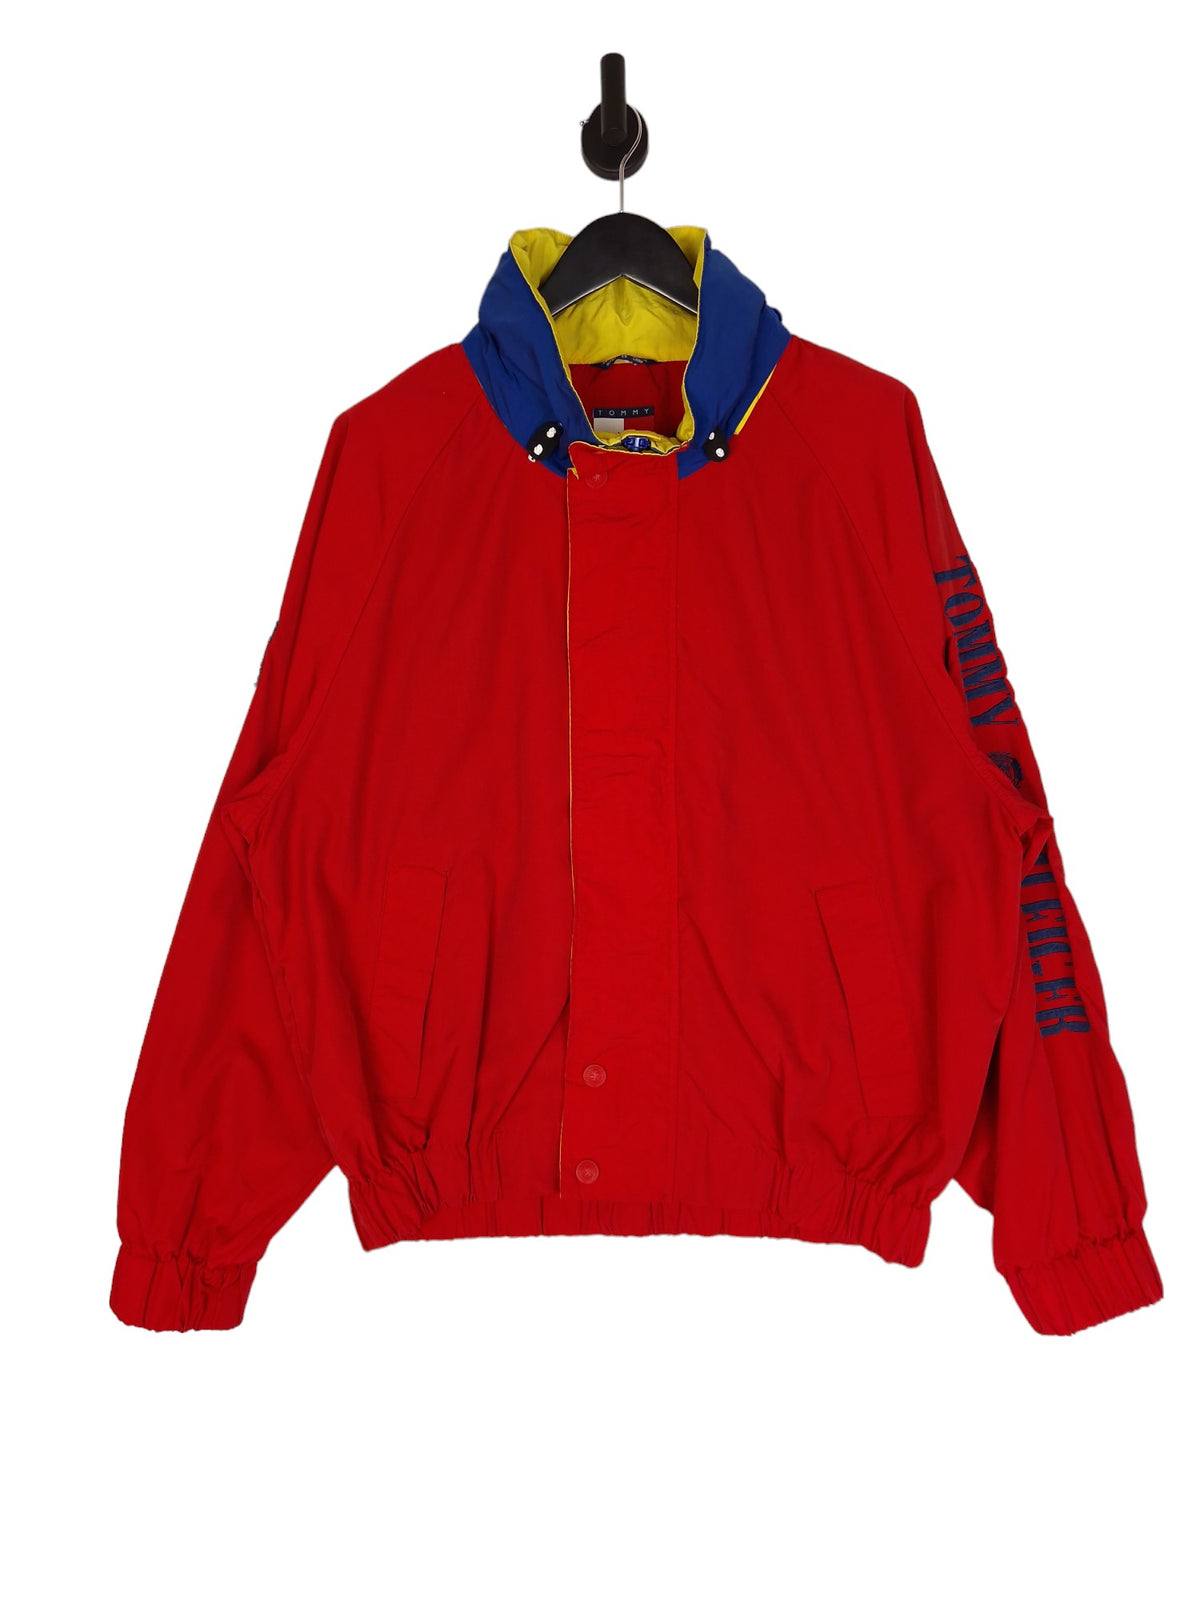 90's Tommy Hilfiger Sailing Jacket - Size L/XL